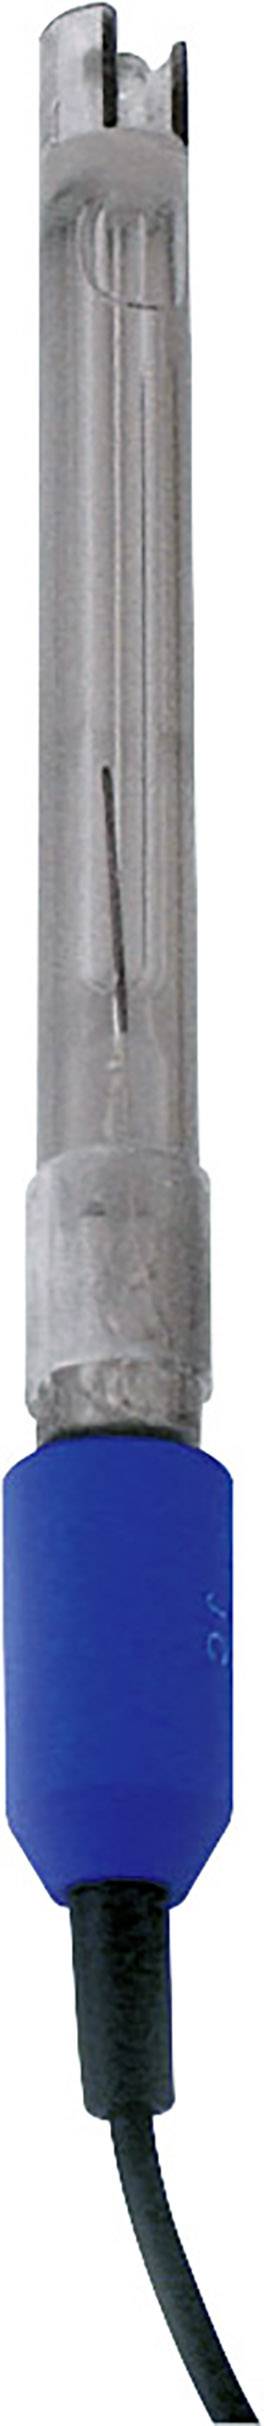 CONRAD VOLTCRAFT Ersatz-Elektrode KBM-110R (VC-8603680)